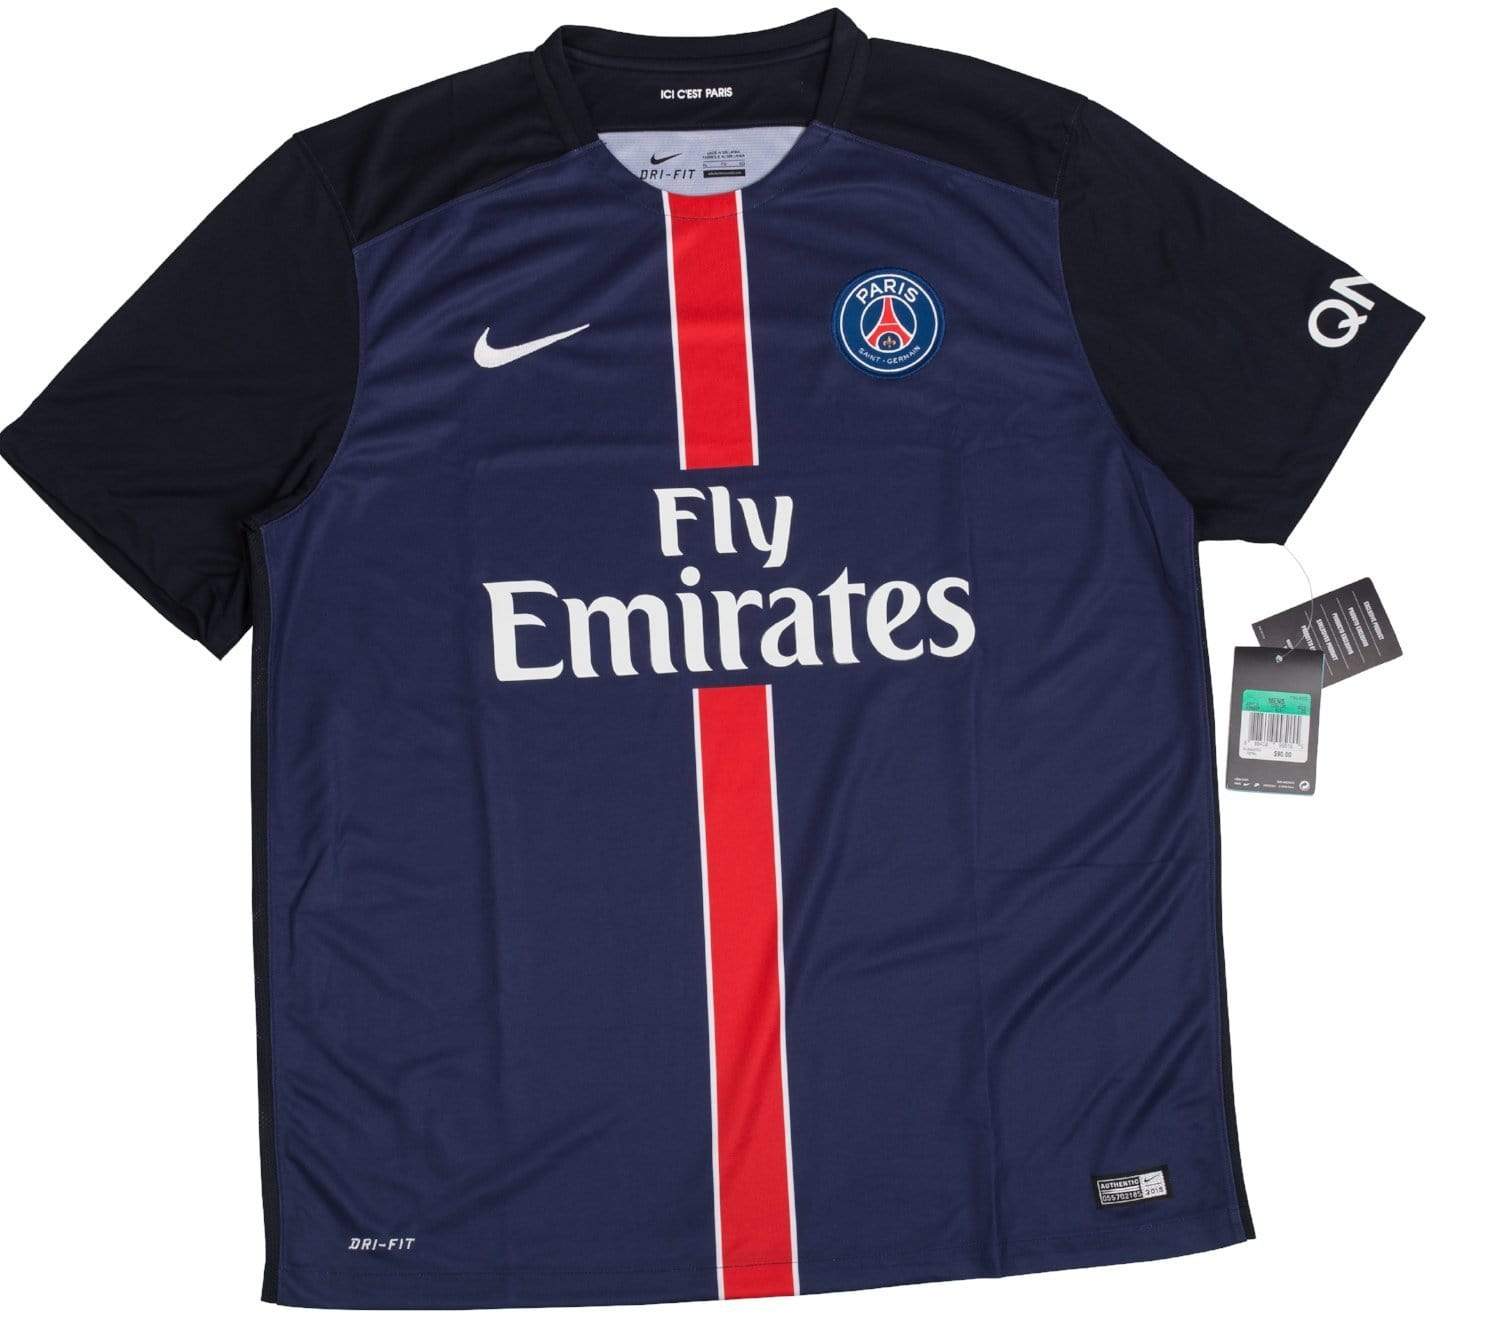 2015-16 PSG home football shirt XL BNWT